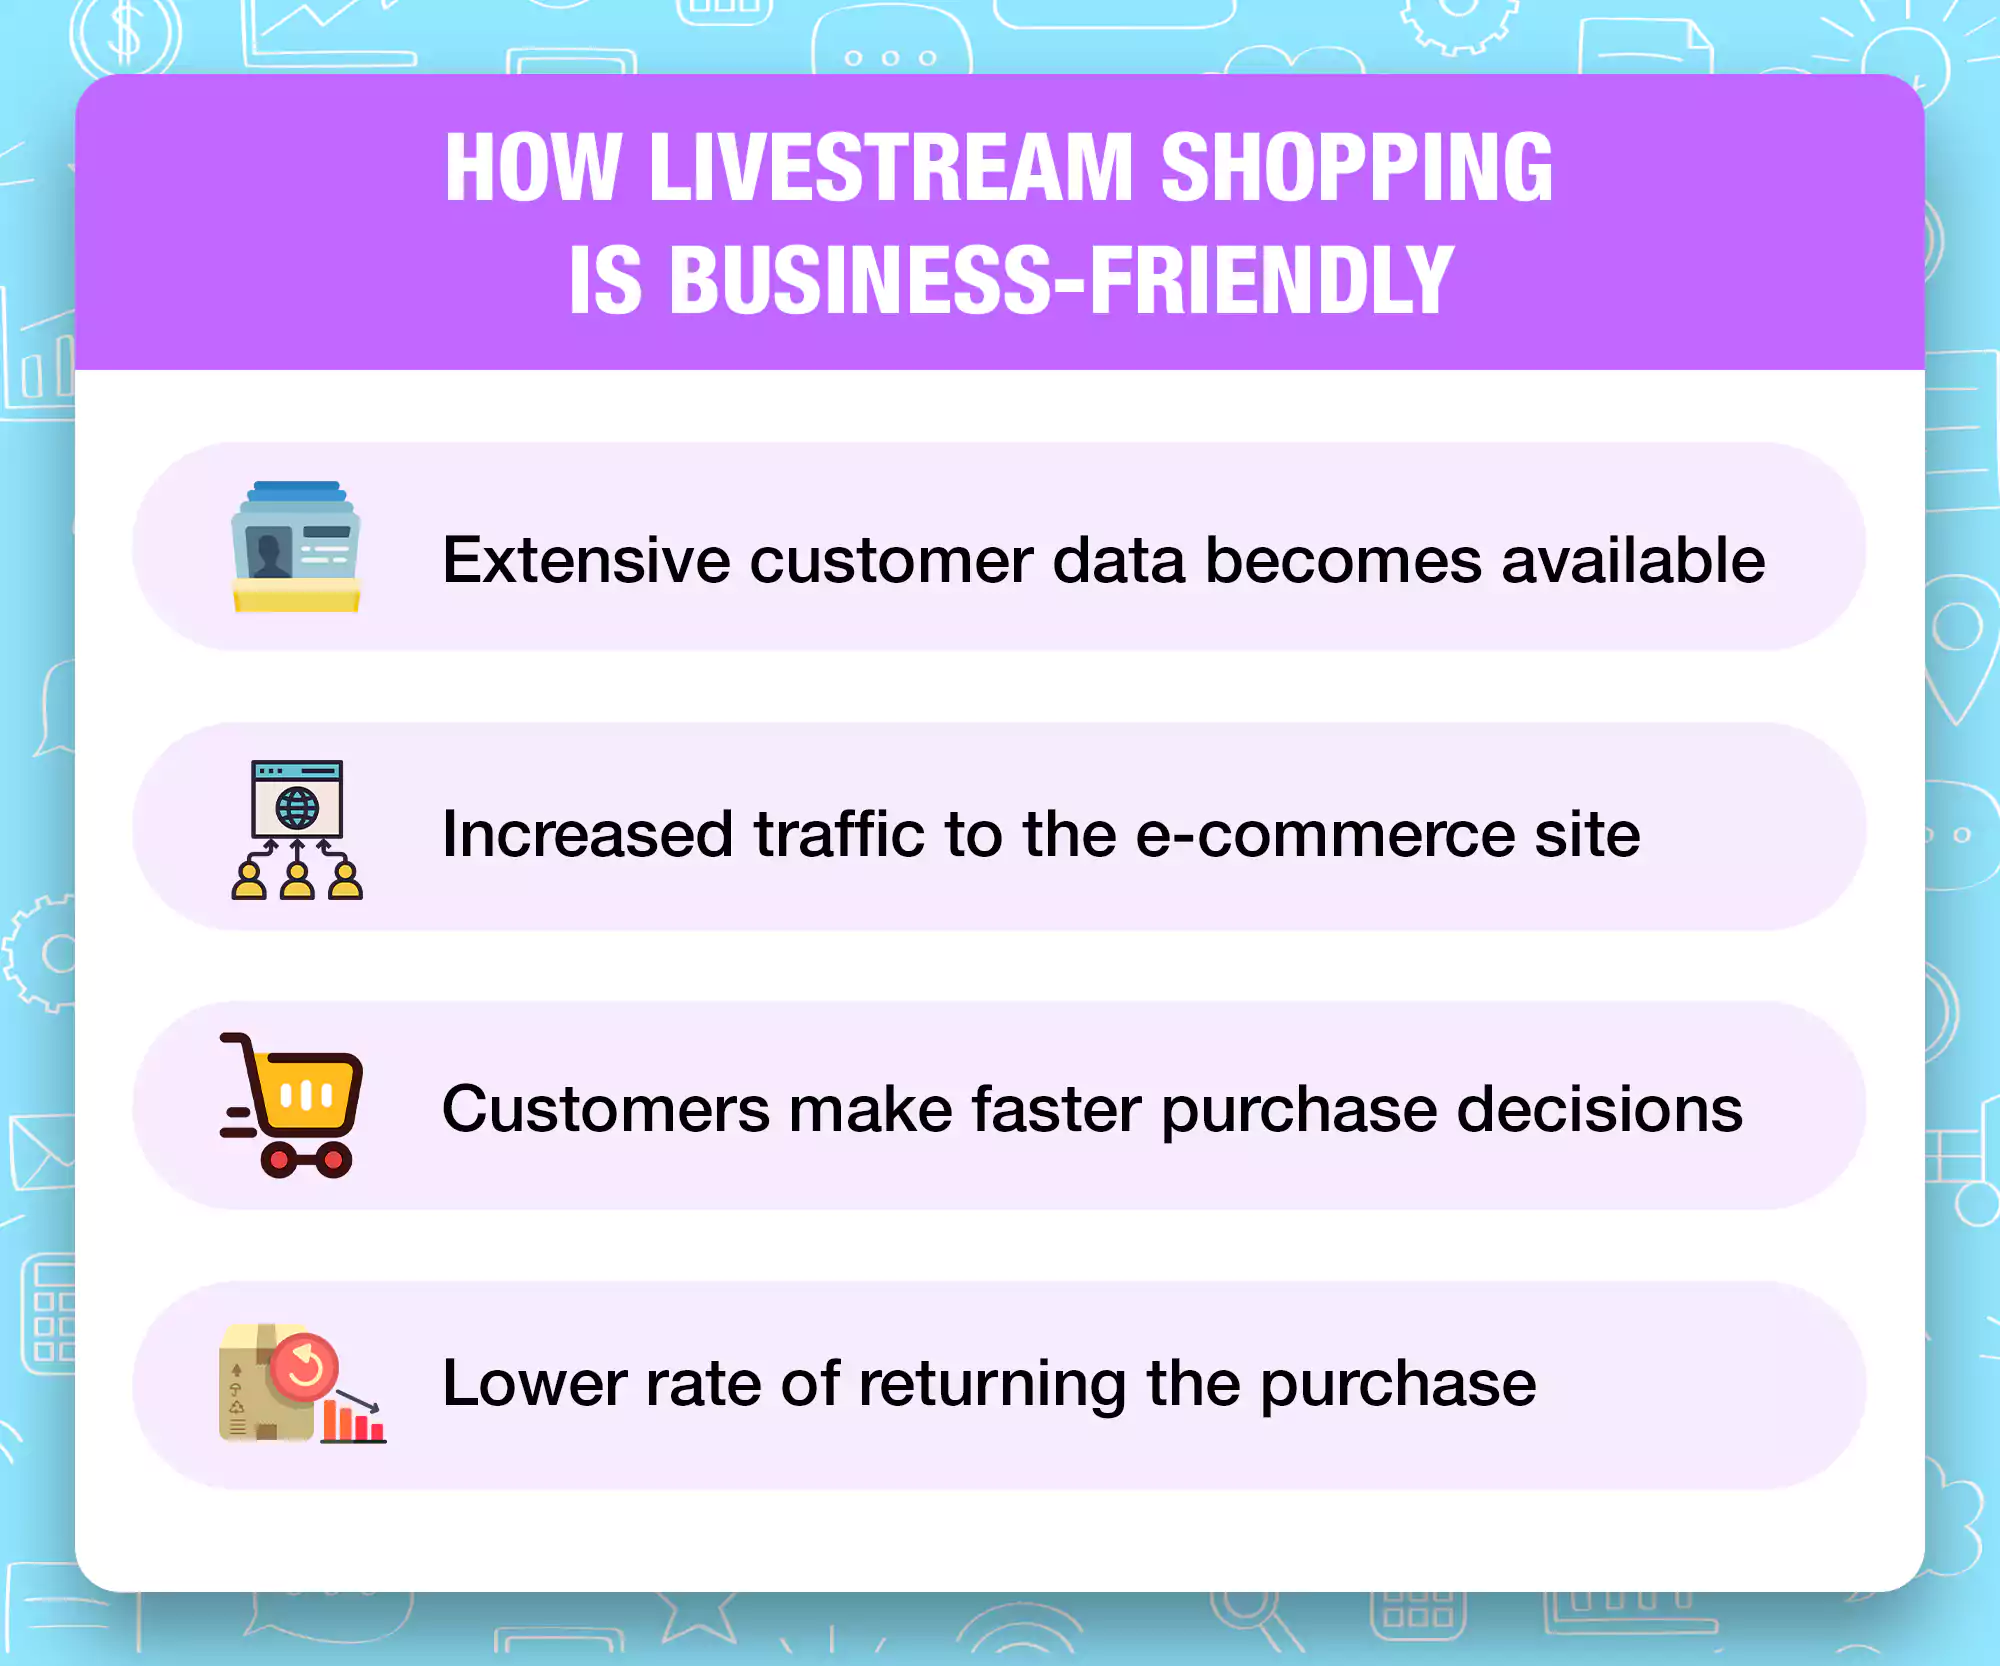 How livestream shopping helps